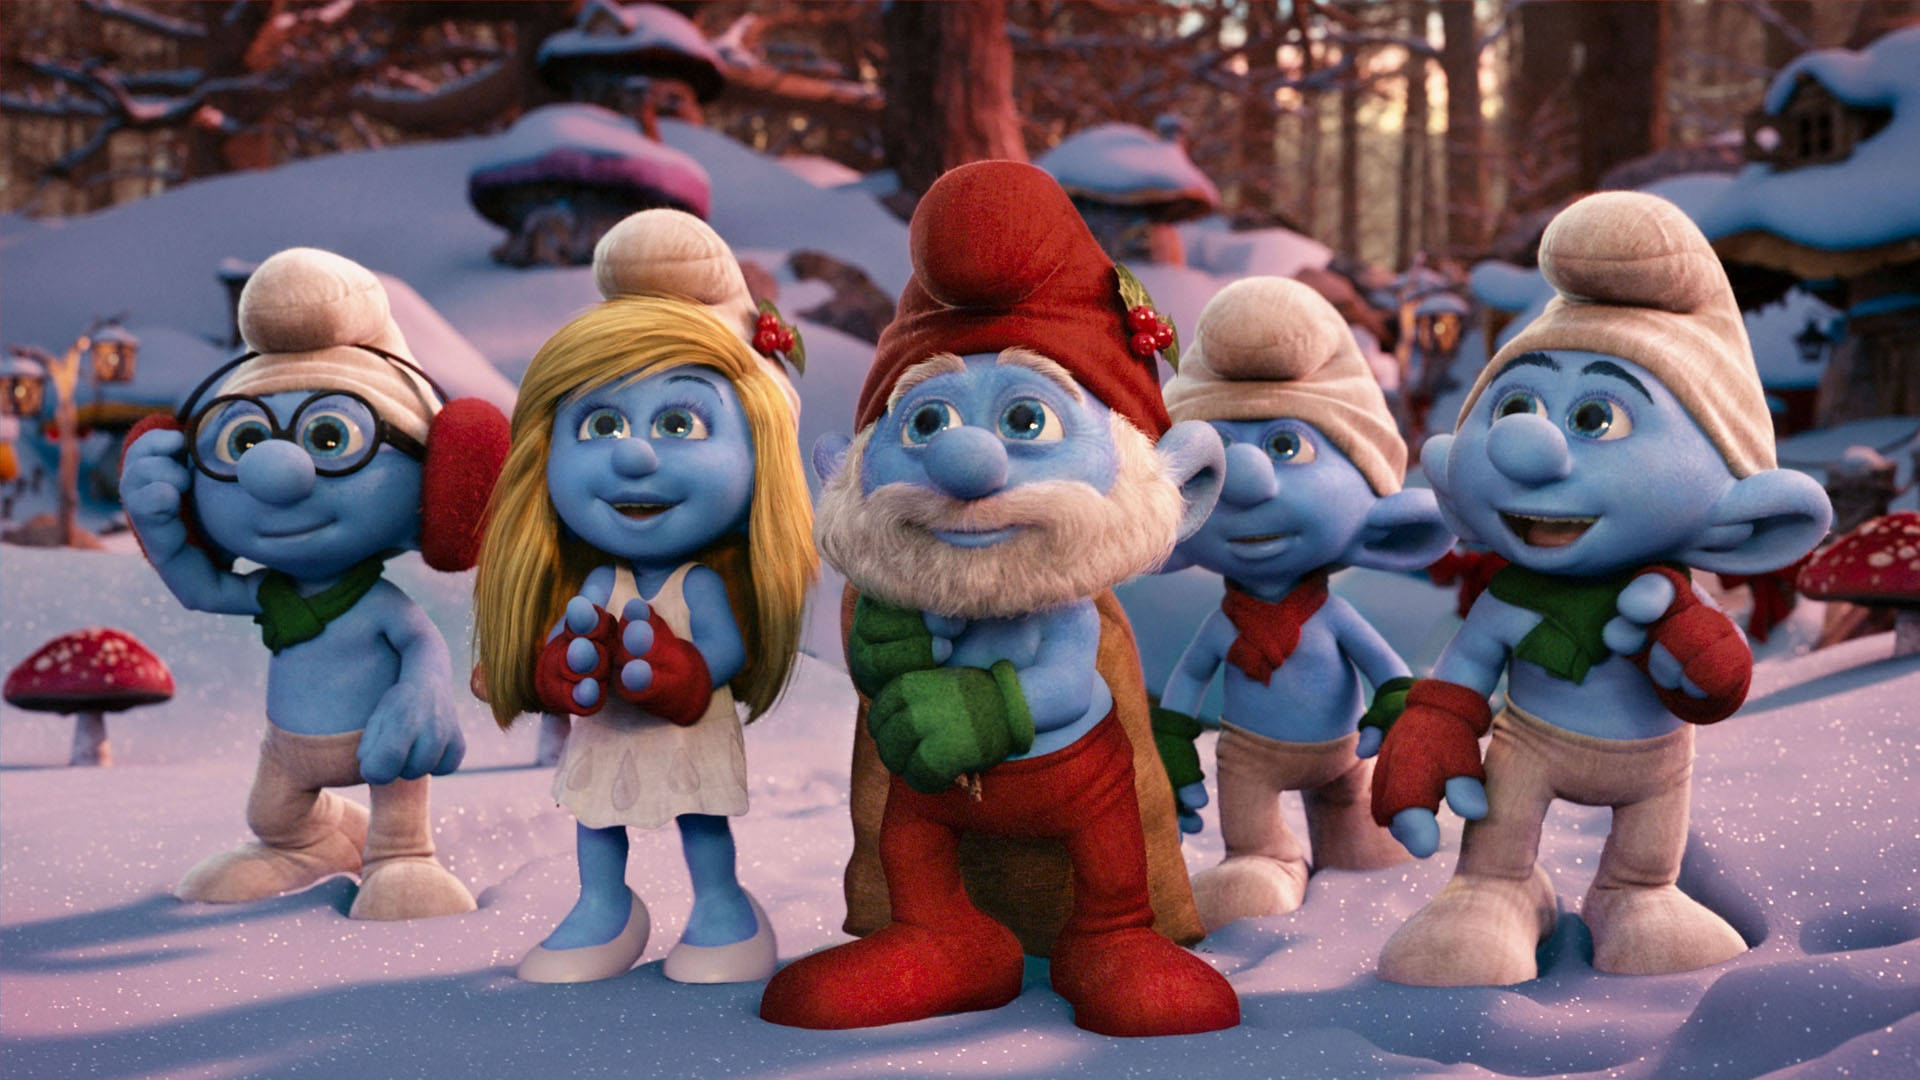 The Smurfs Christmas Carol Background